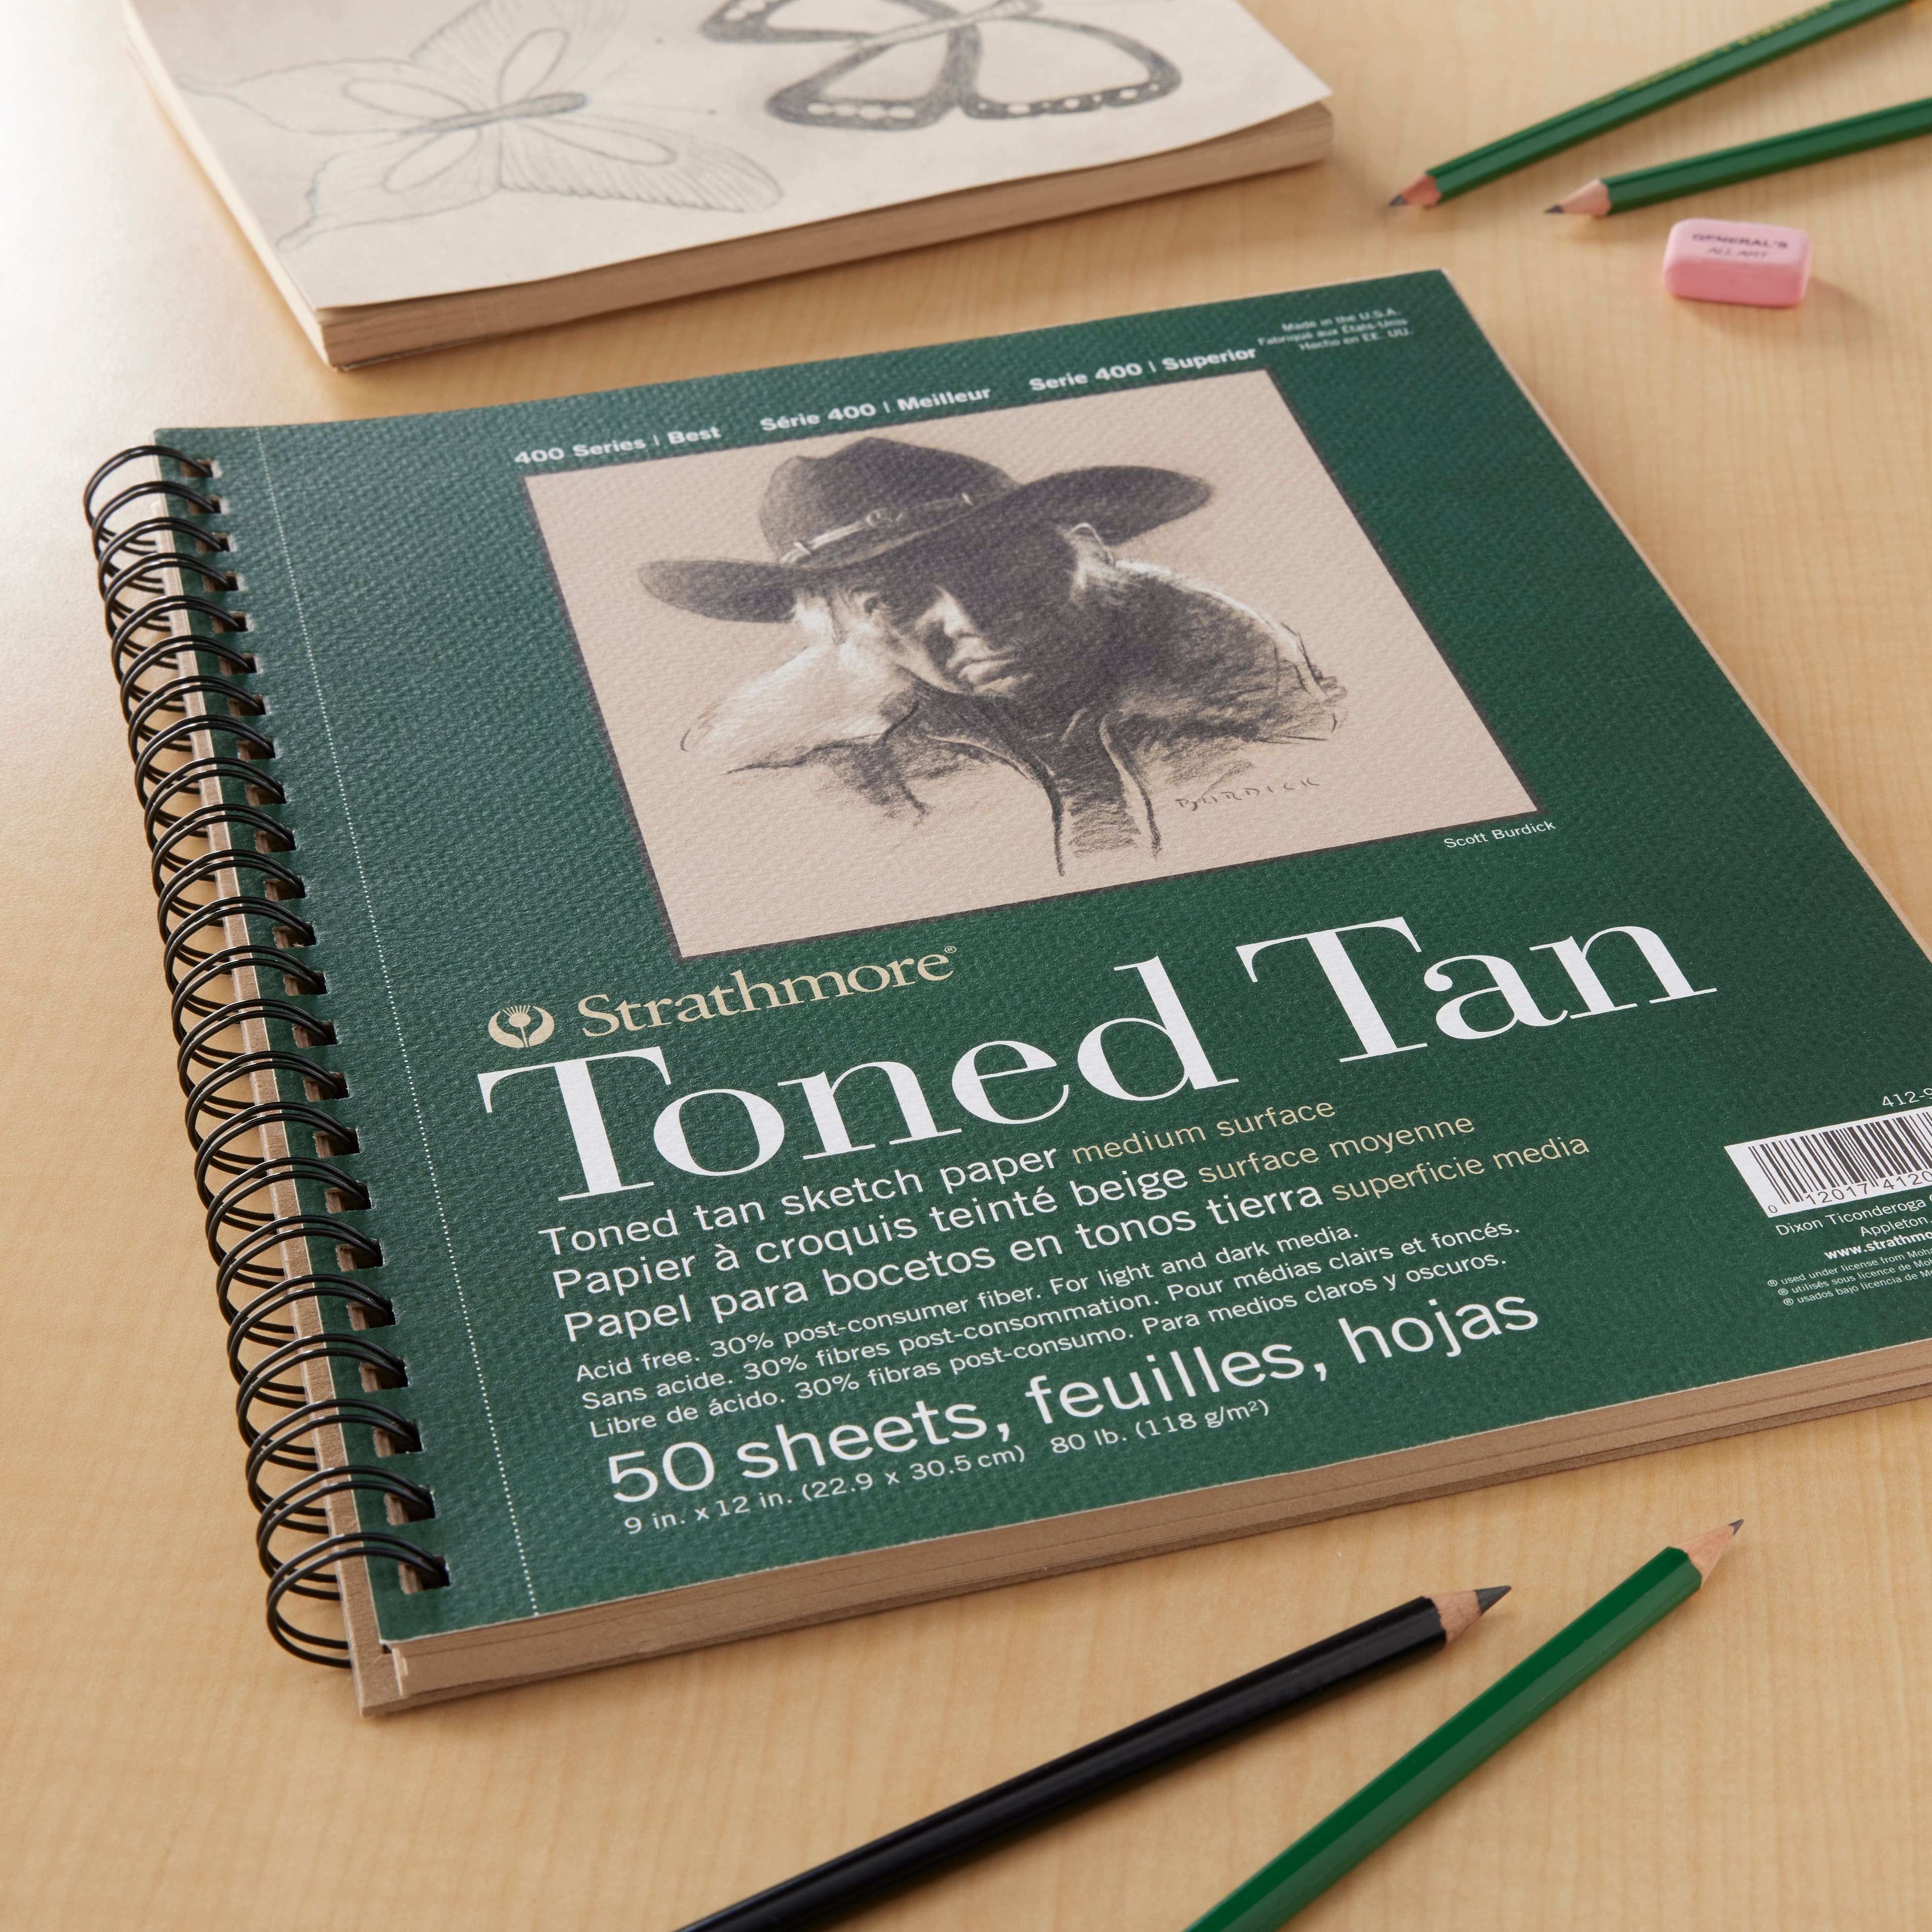 Strathmore Tan Drawing 400 Series, Toned Sketch Pad,Toned Gray